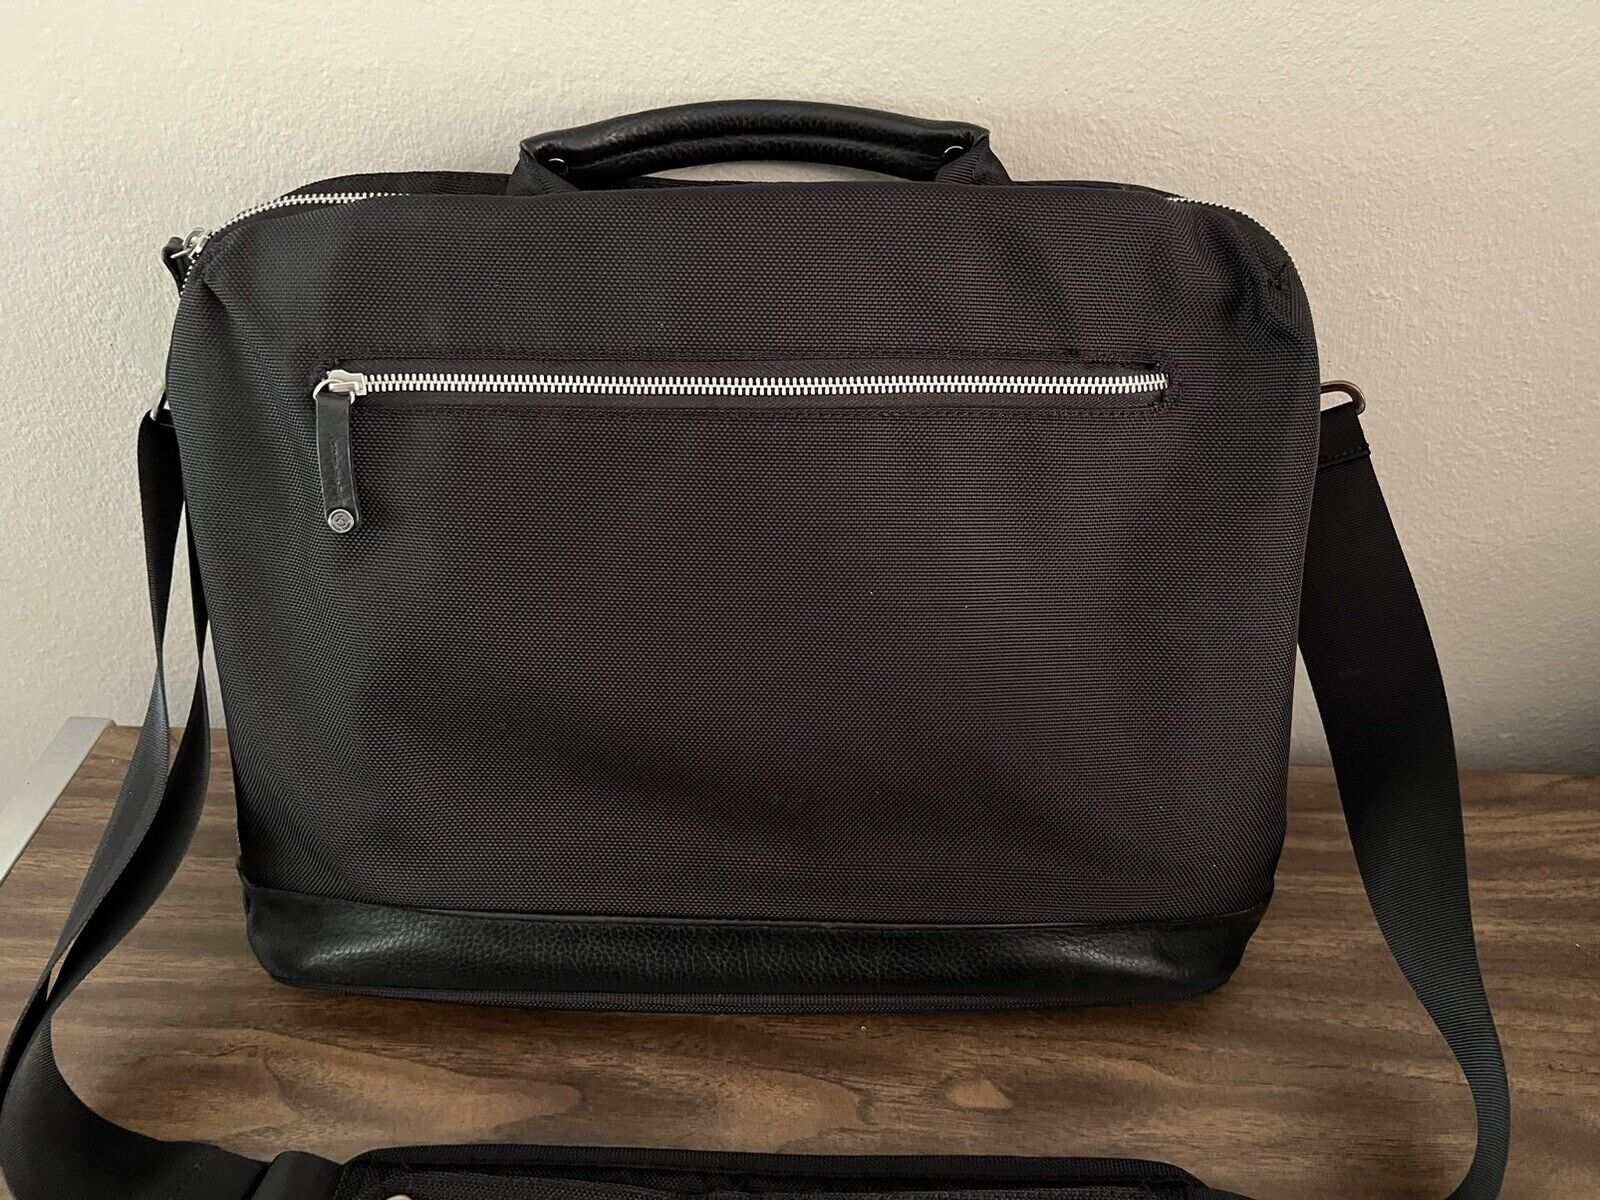 BOOQ Cobra Brief - 15” MacBook or Laptop Messenger Bag - Black - Leather Trim